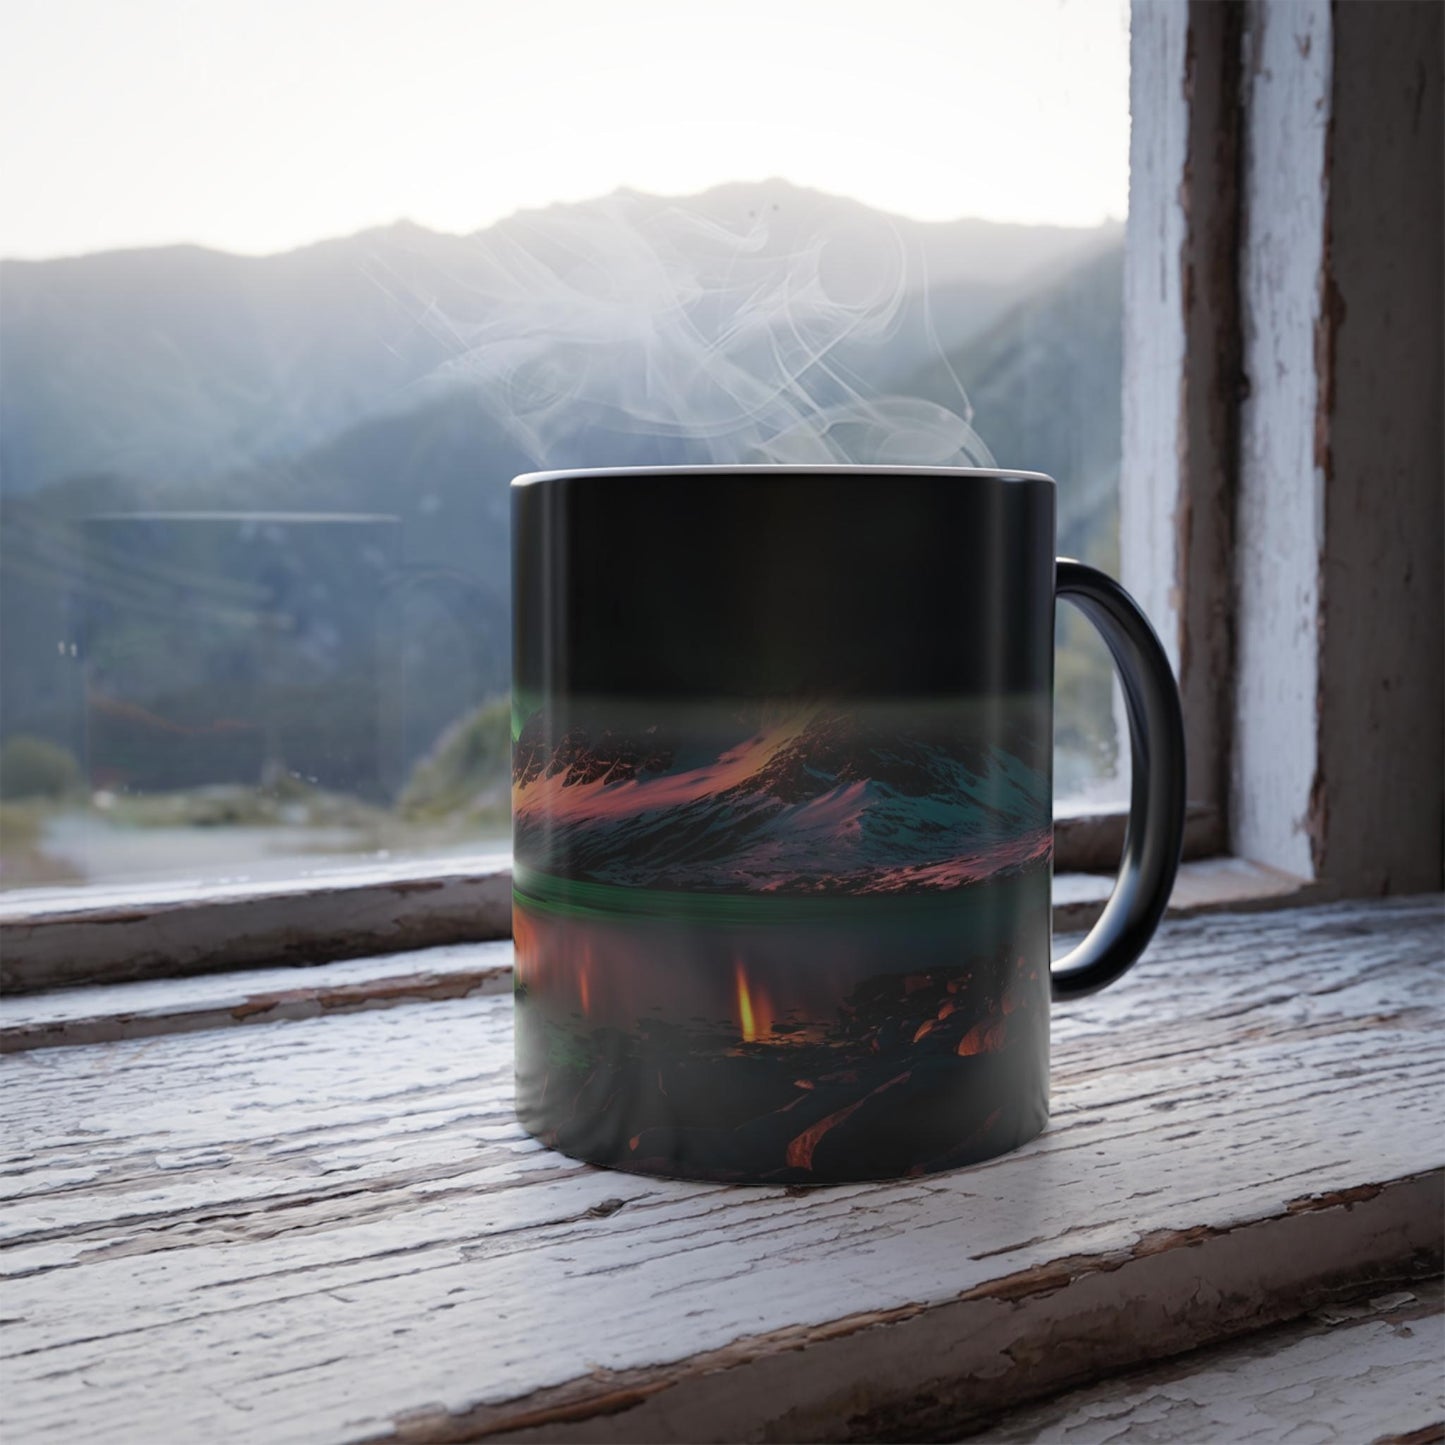 Enchanting Aurora Borealis Heat Sensitive Mug - Northern Lights Magic Color Morphing Mug 11oz - Heat Reactive Night Sky Coffee Cup - Perfect Gift for Nature Lovers 20